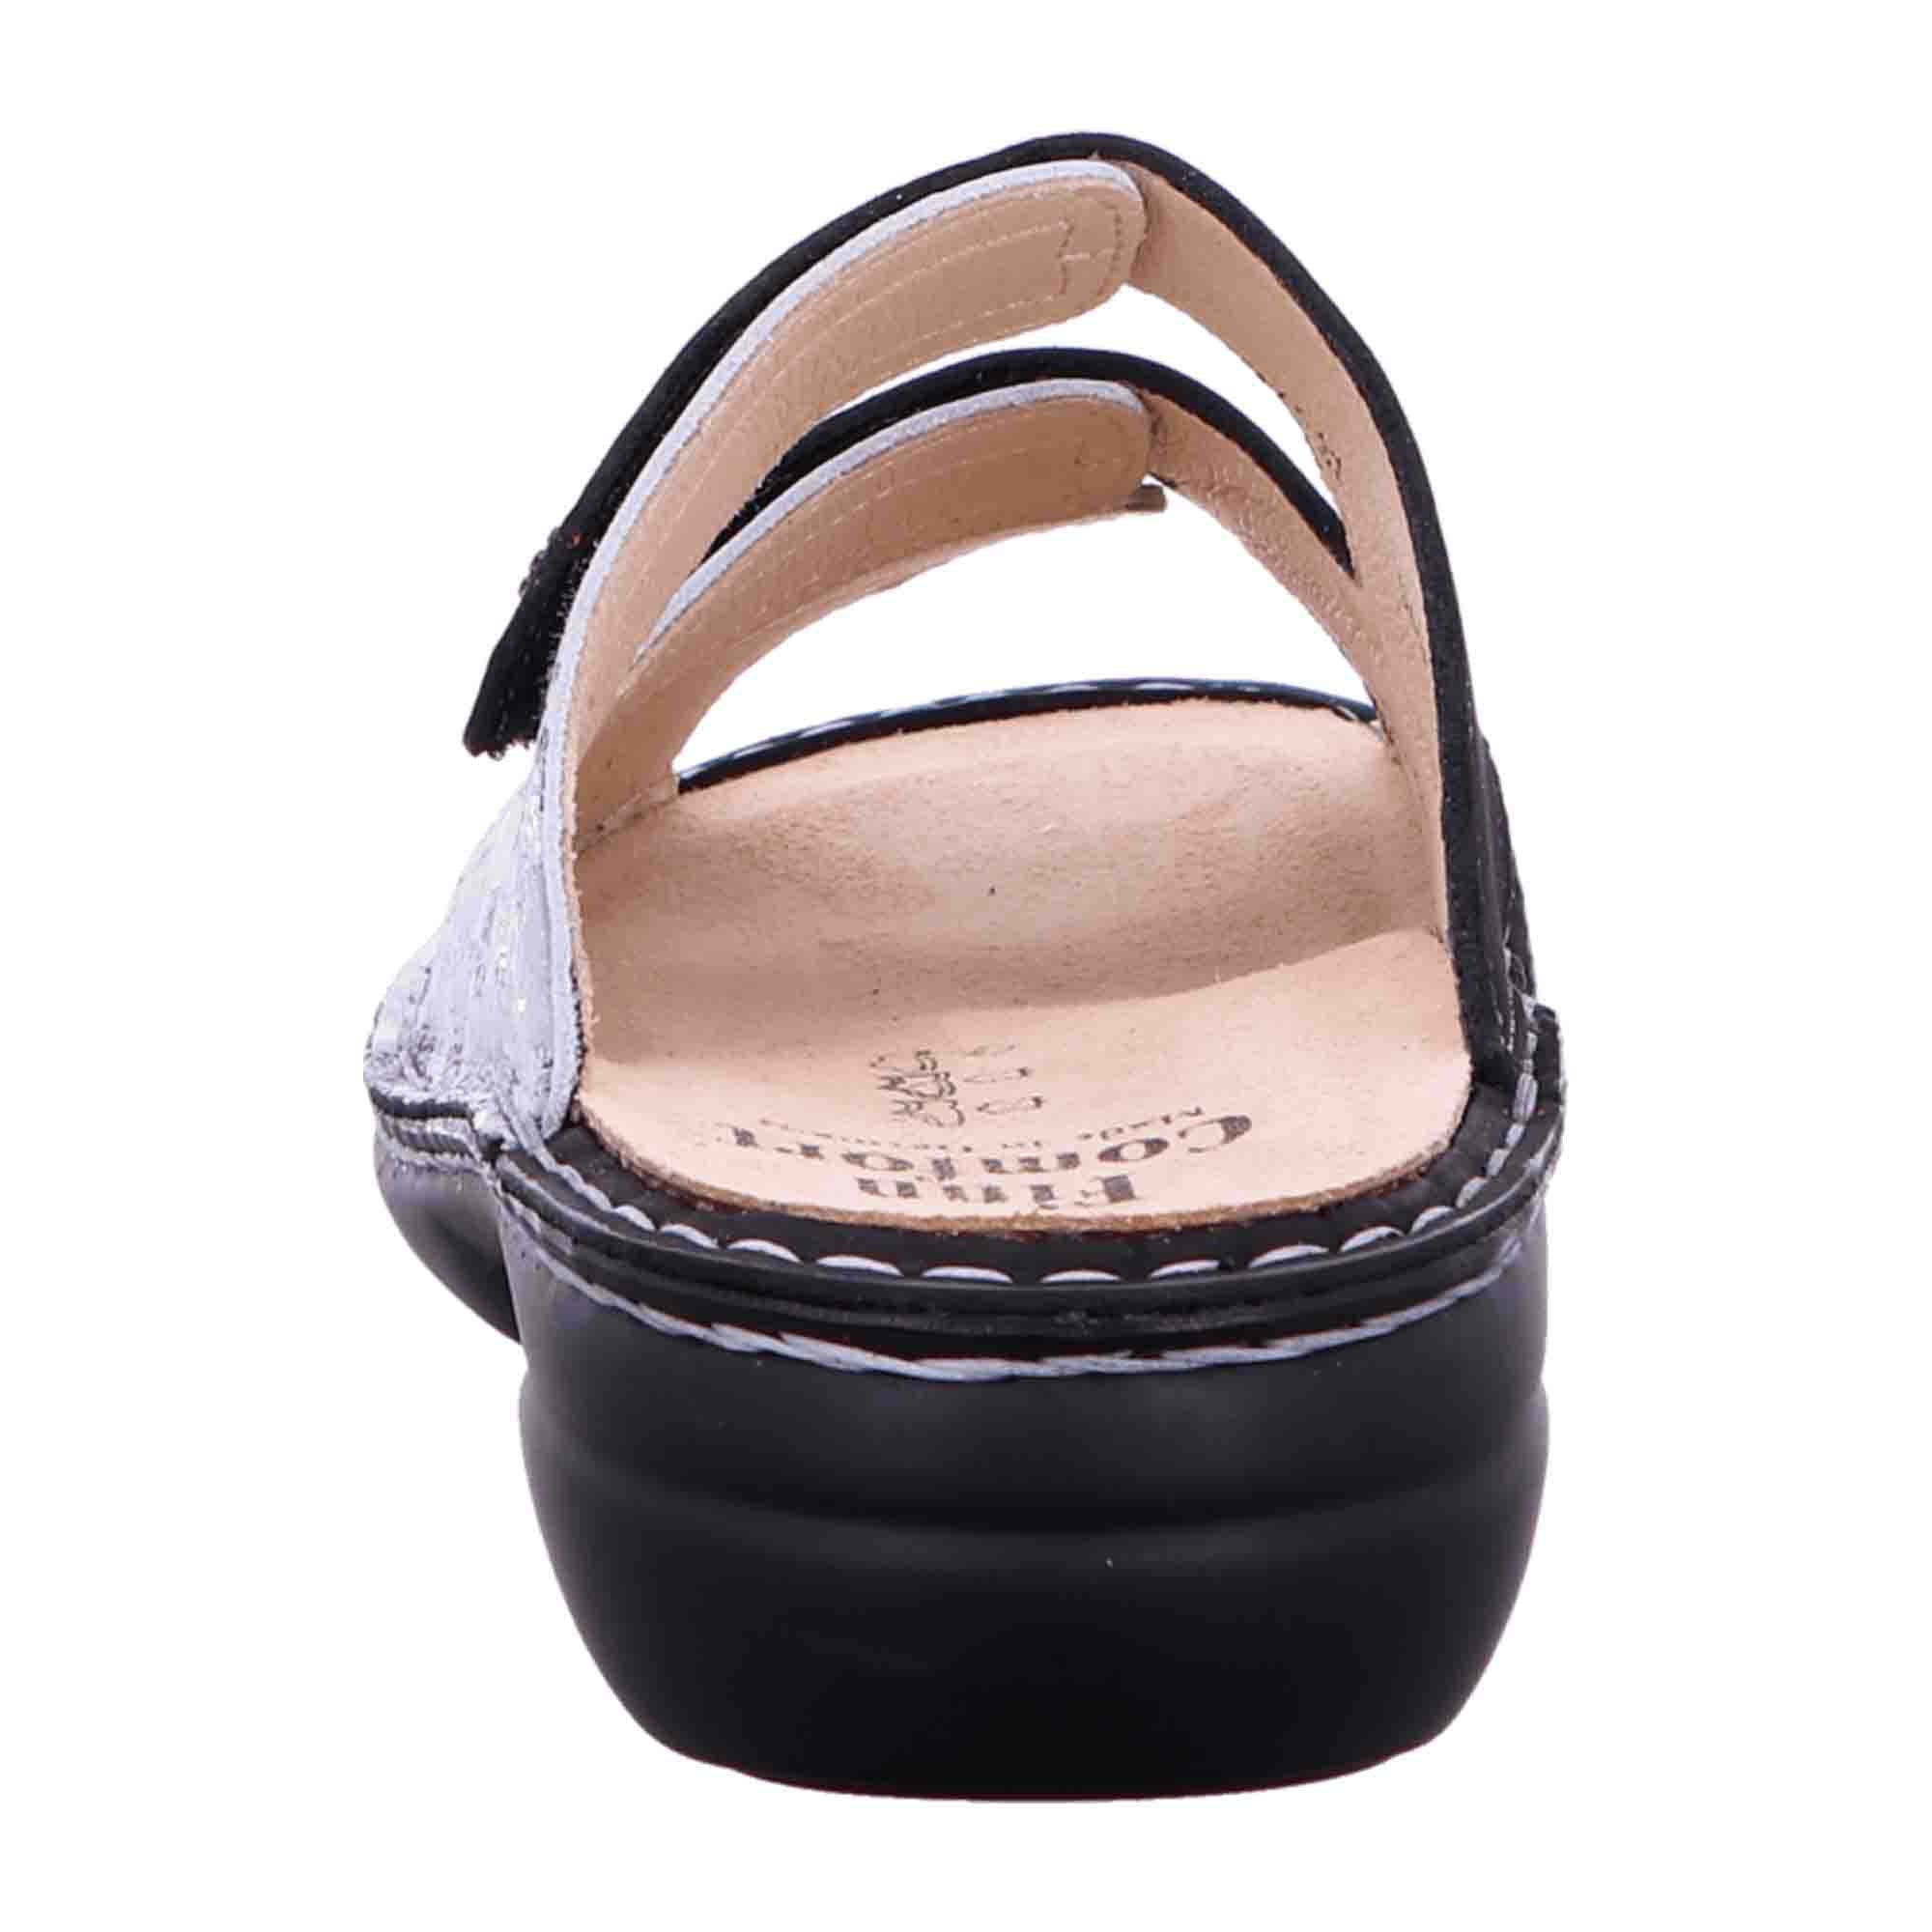 Finn Comfort Cisano Women's Comfortable Sandals - Stylish Silver Finish